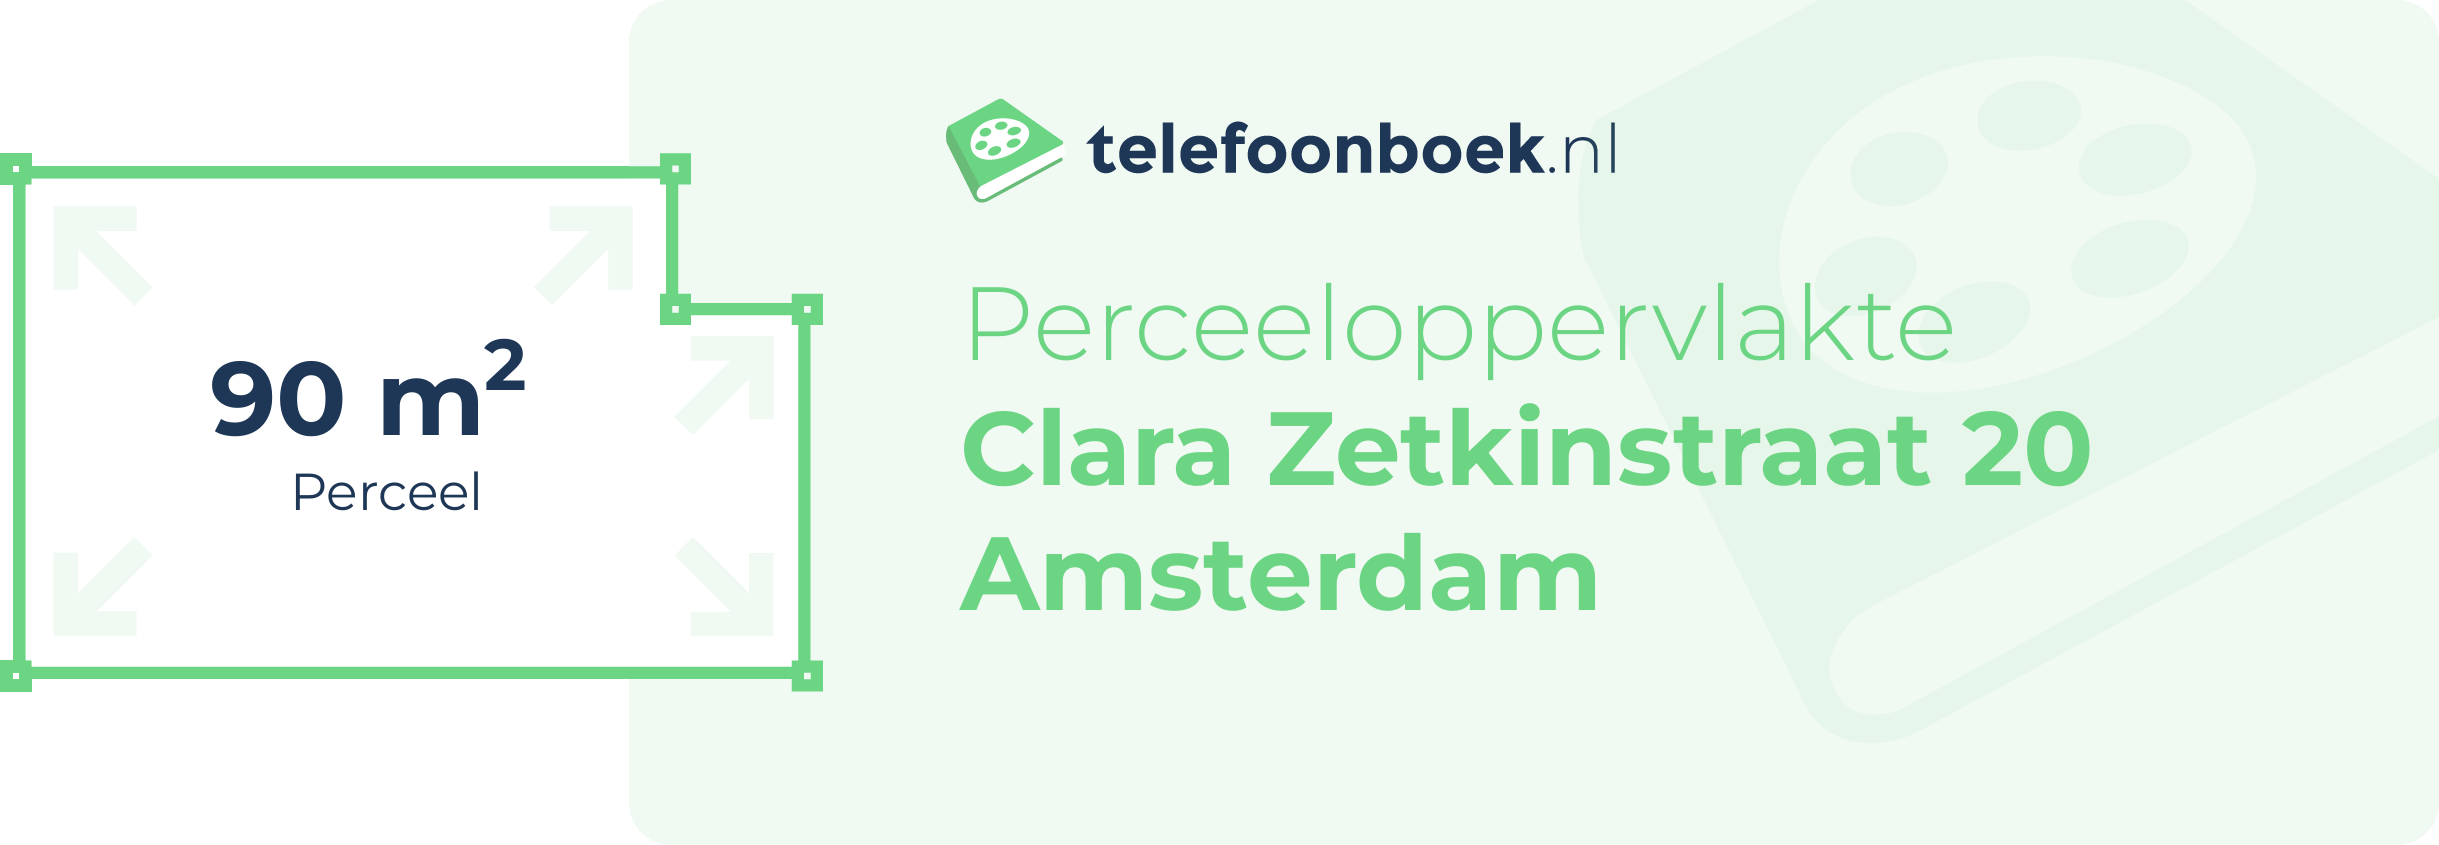 Perceeloppervlakte Clara Zetkinstraat 20 Amsterdam